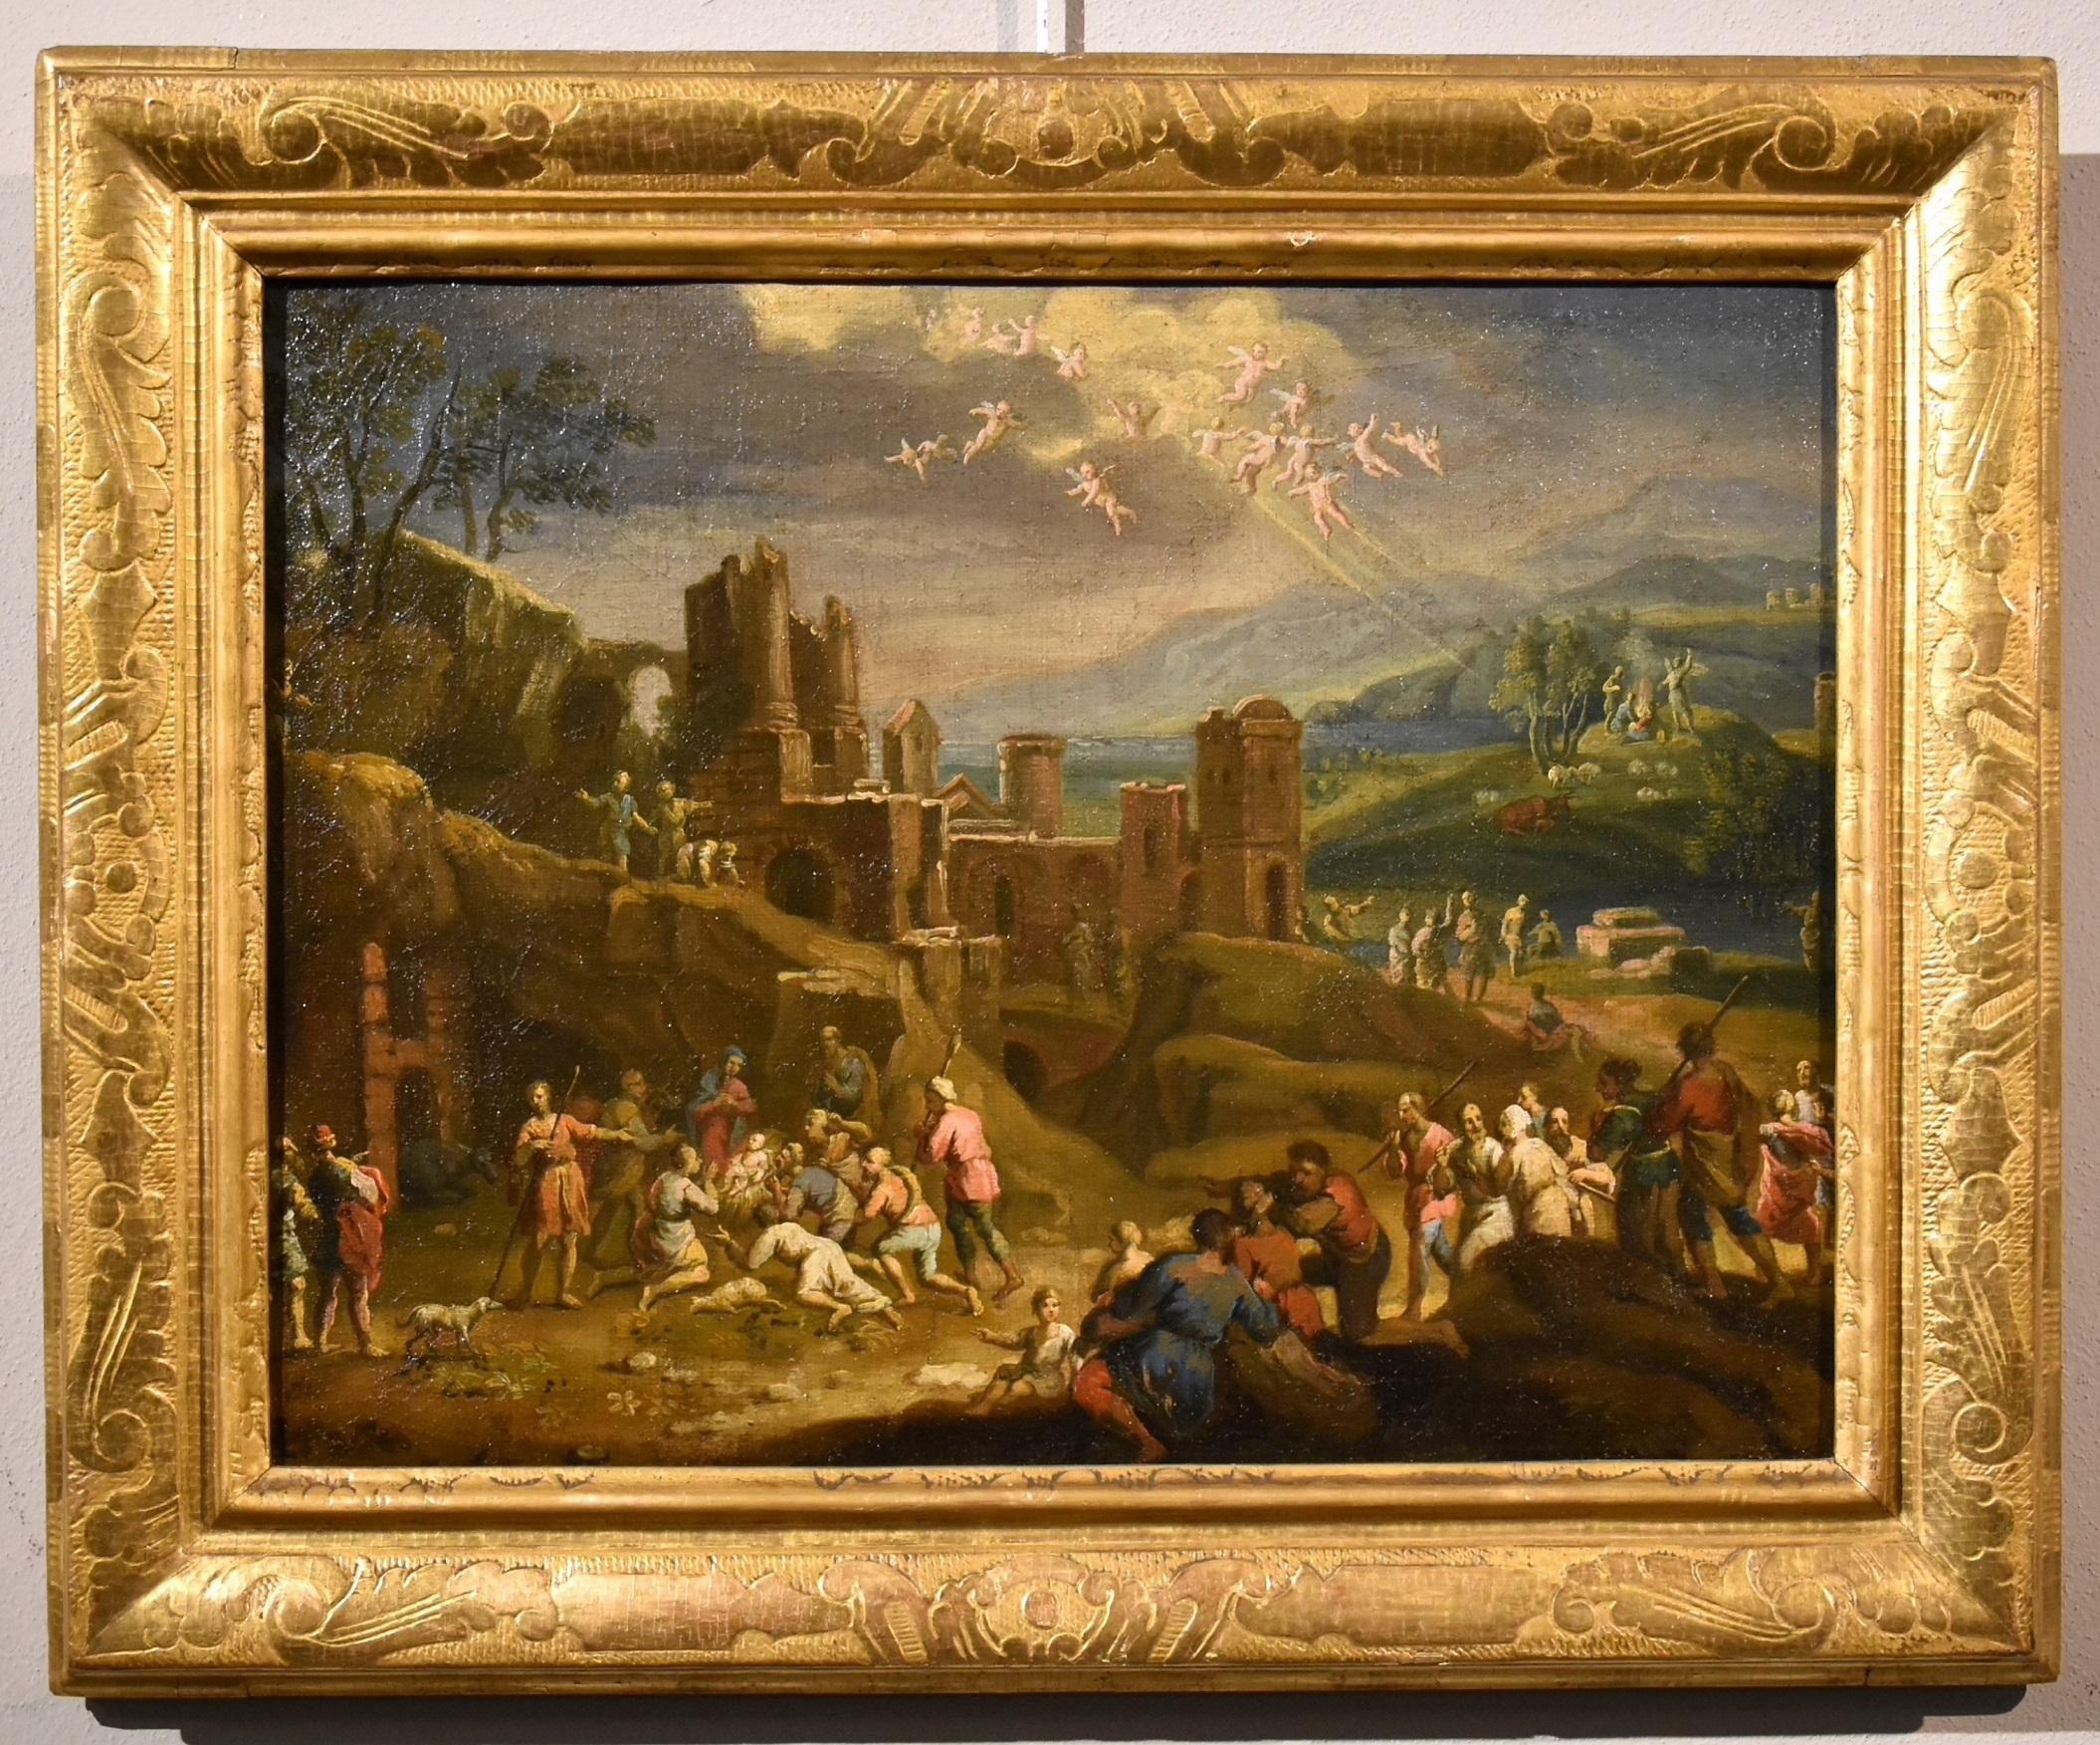 Scipione Compagni, or Compagno (Naples, about 1624 - after 1680) Landscape Painting – Landschaft, religiöse Malerei, Öl auf Leinwand, alter Meister, 17. Jahrhundert, Italien